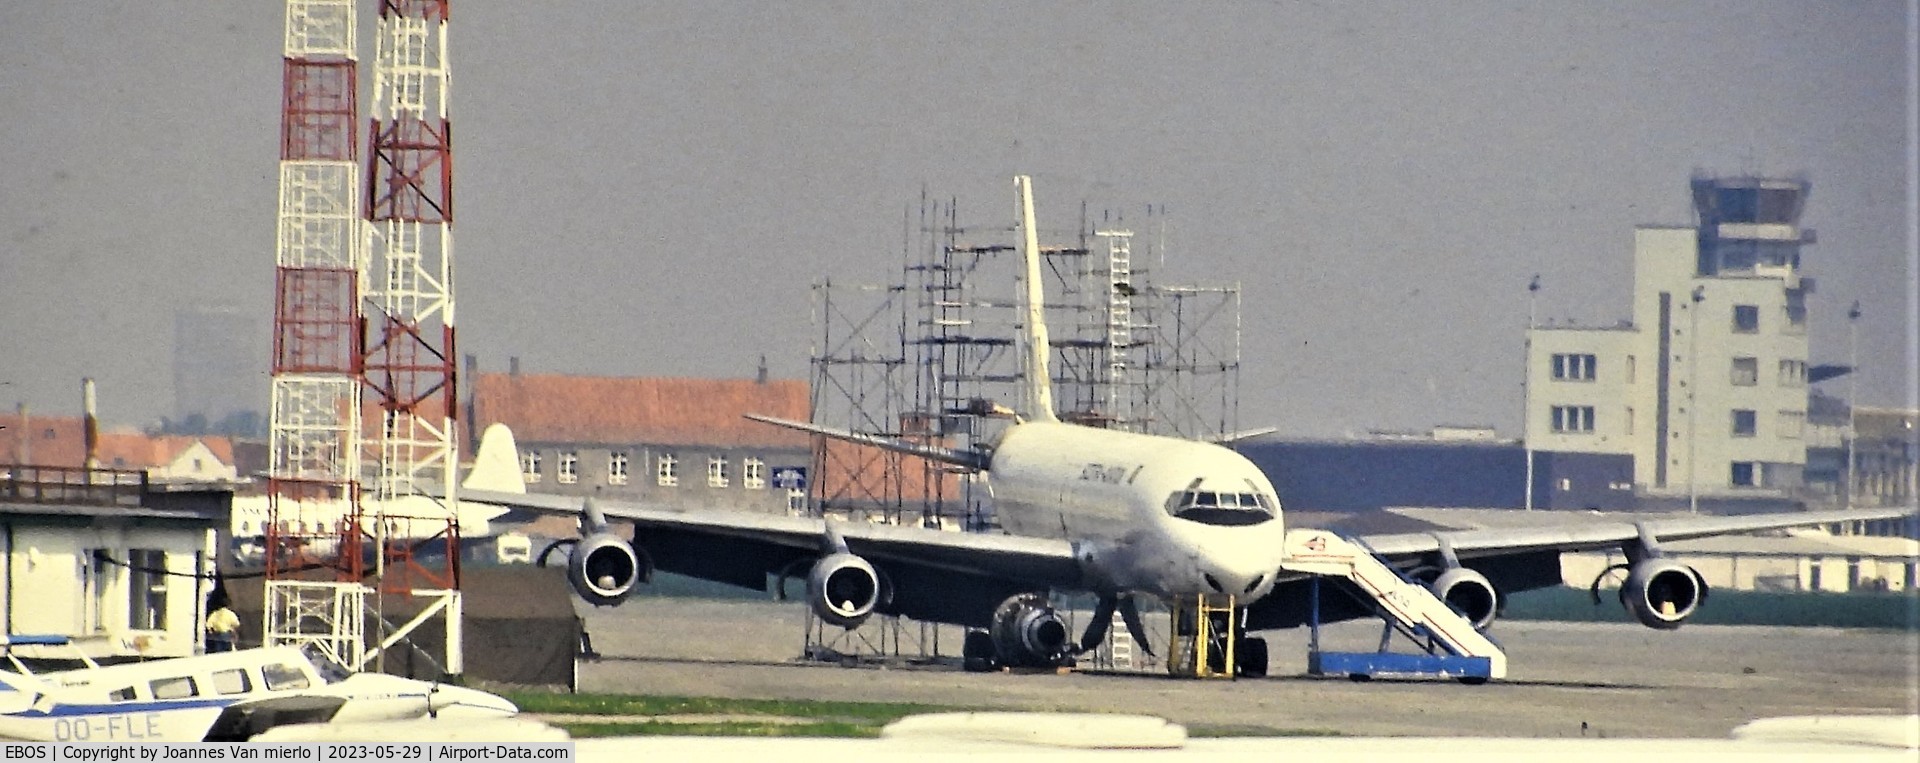 Ostend-Bruges International Airport, Ostend Belgium (EBOS) - Slide scan